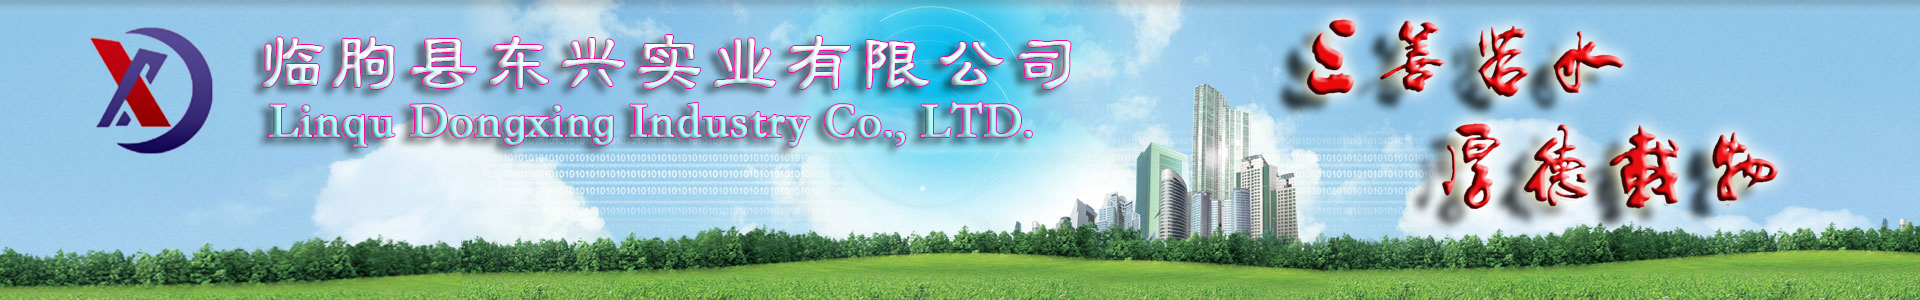 Linqu Dongxing Industry Co., LTD.